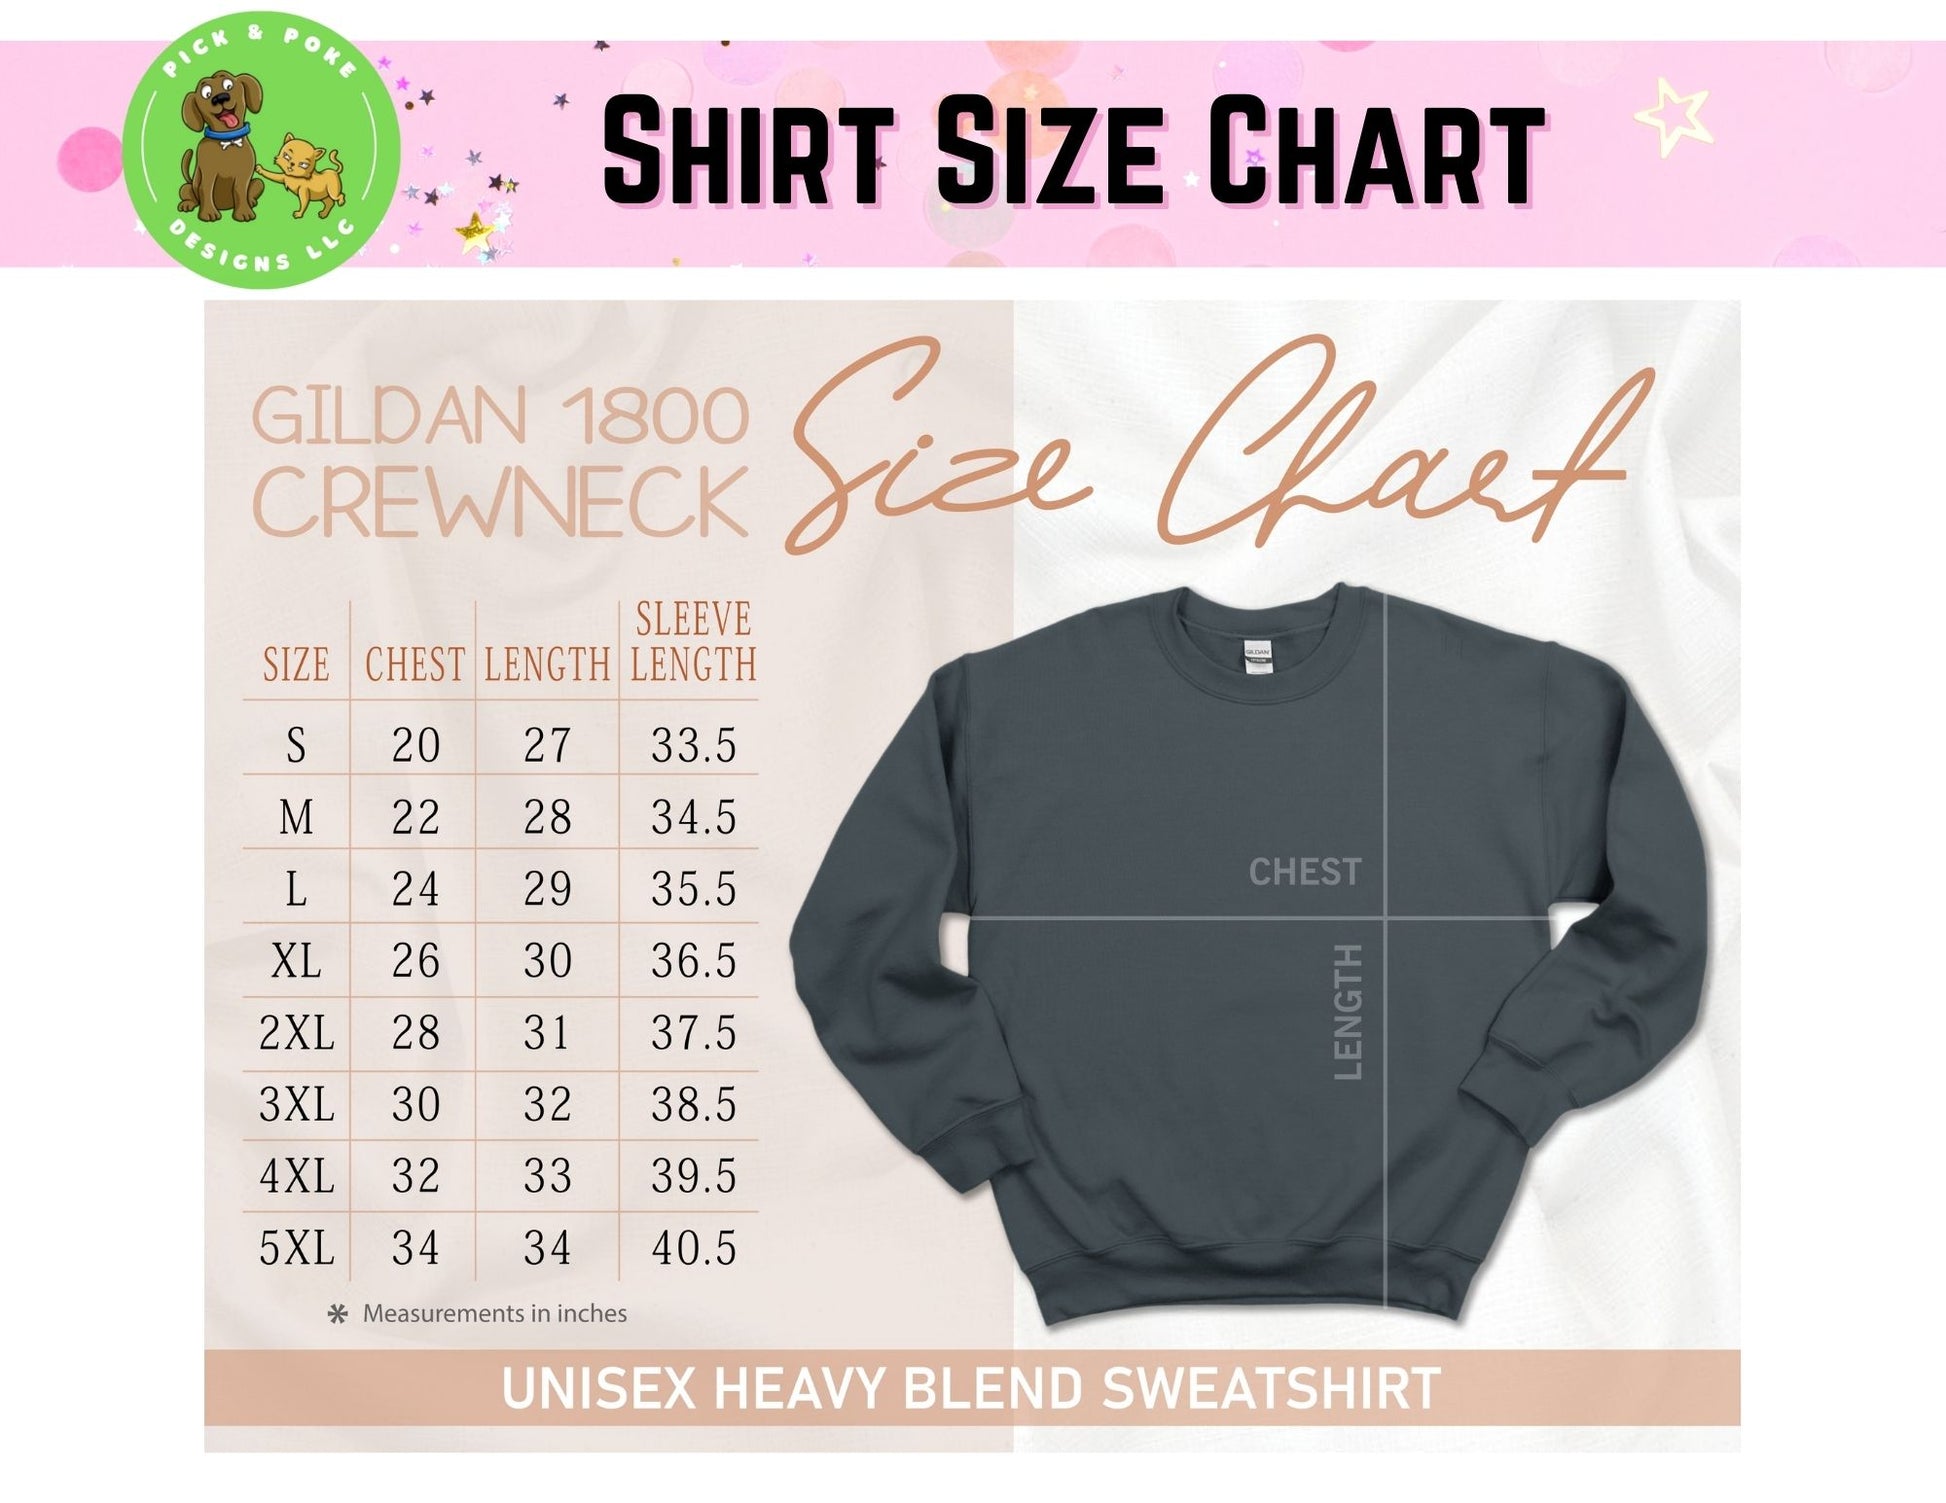 Size chart for crewneck sweatshirts